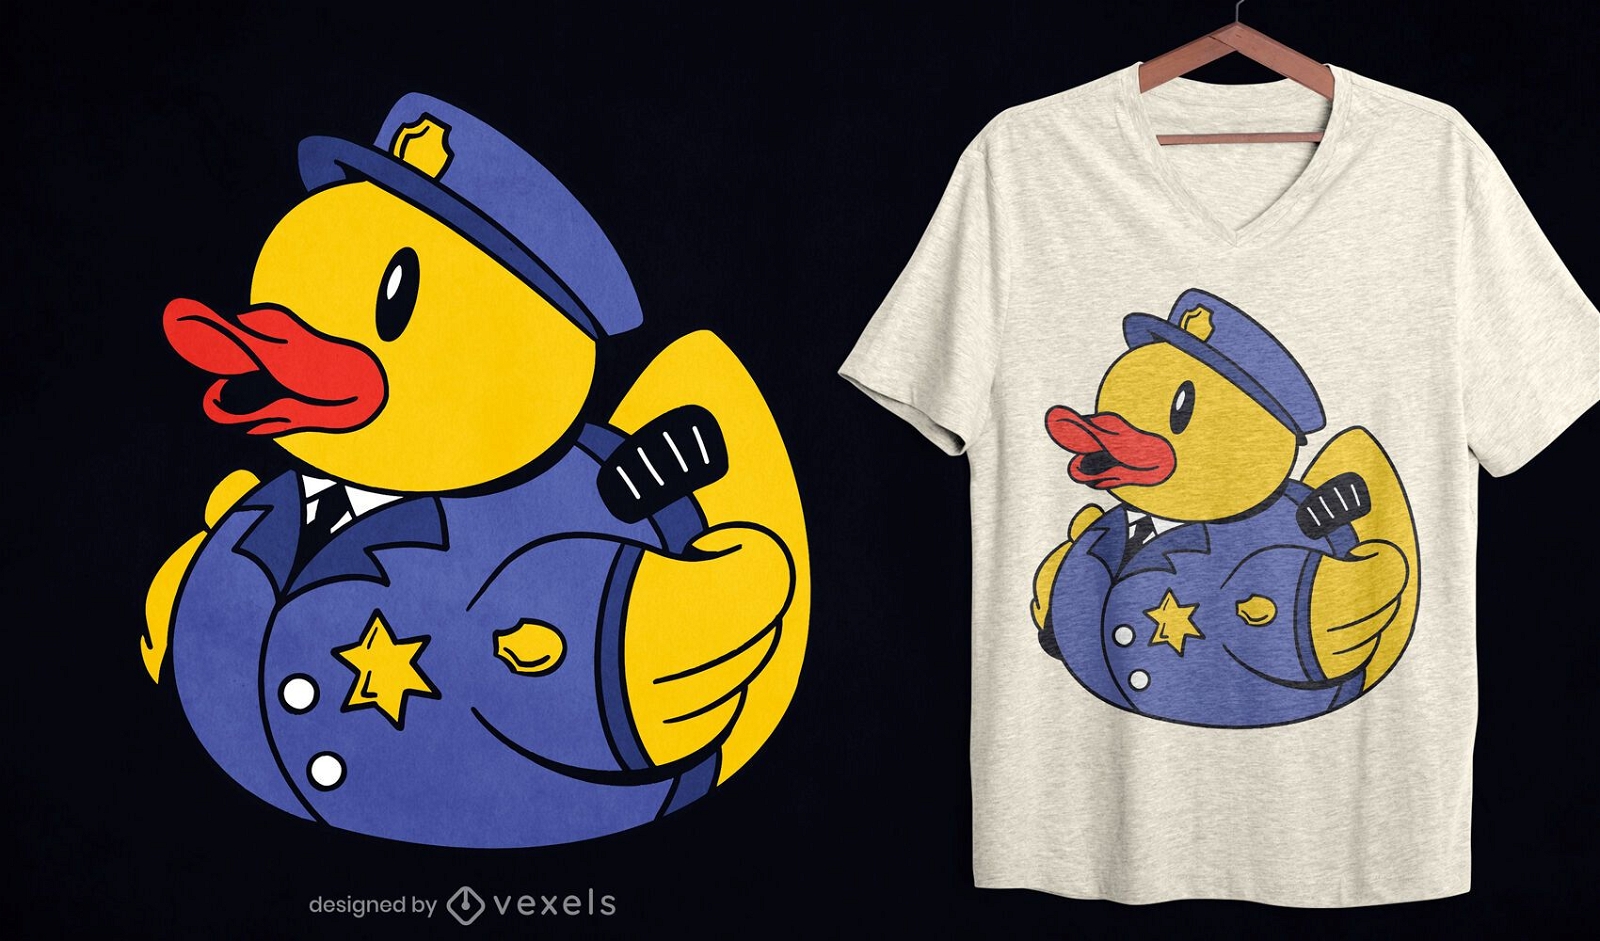 Police rubber duck t-shirt design